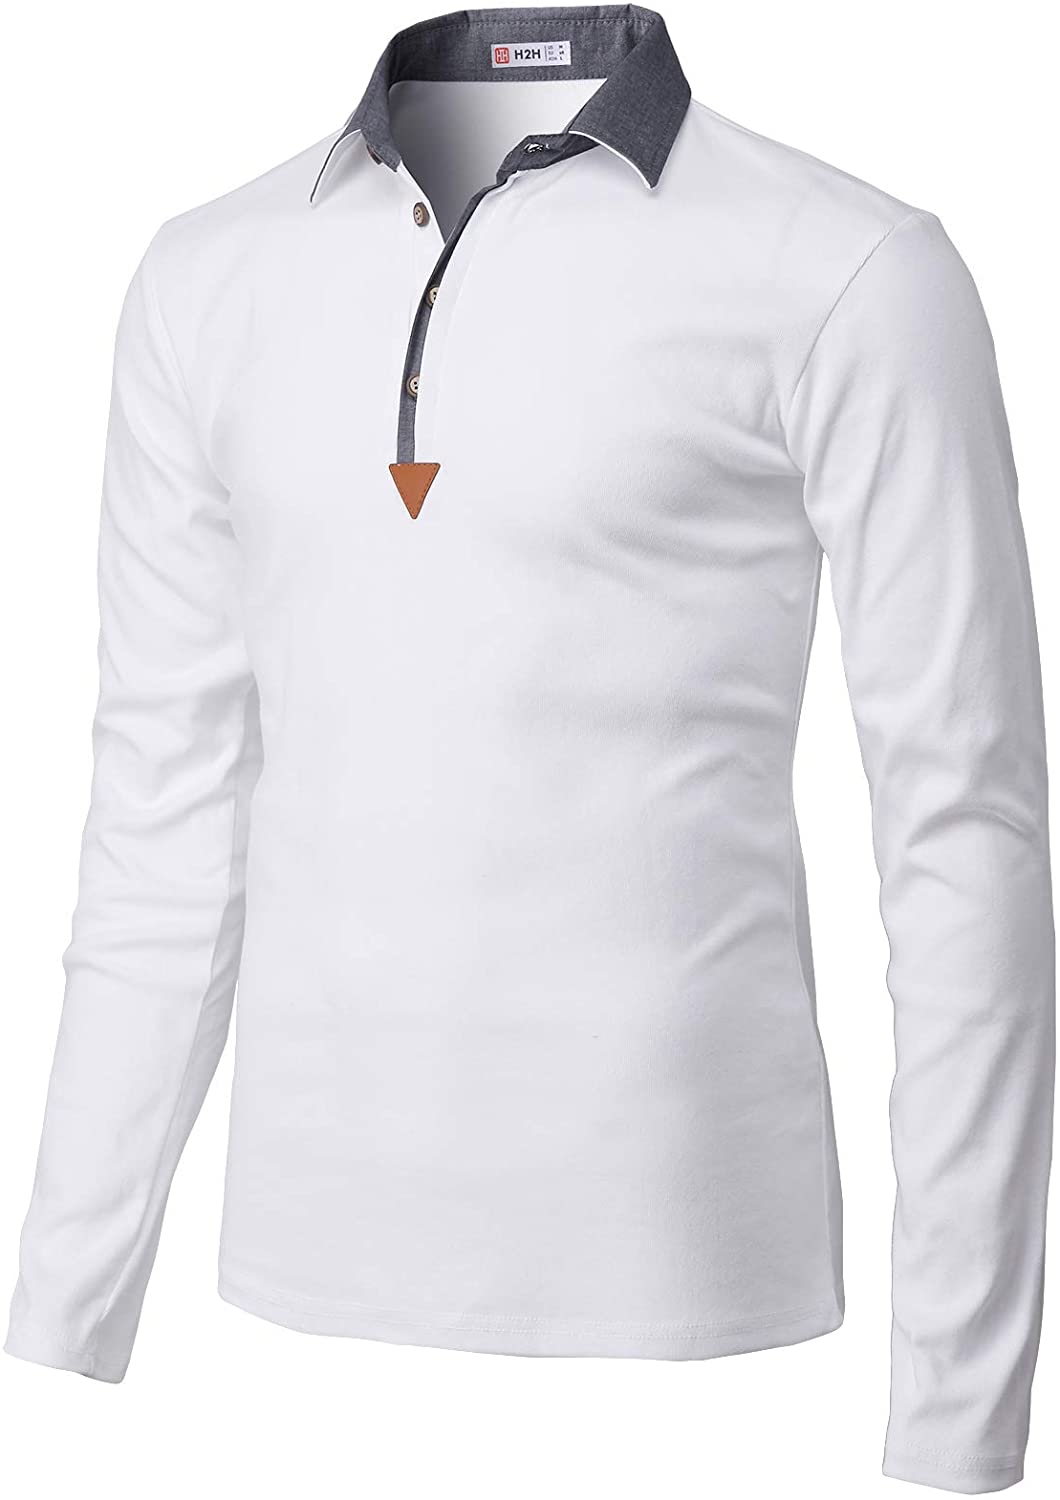 H2H Mens Casual Slim Fit Polo Shirt Tops Lightweight Longsleeve Basic ...